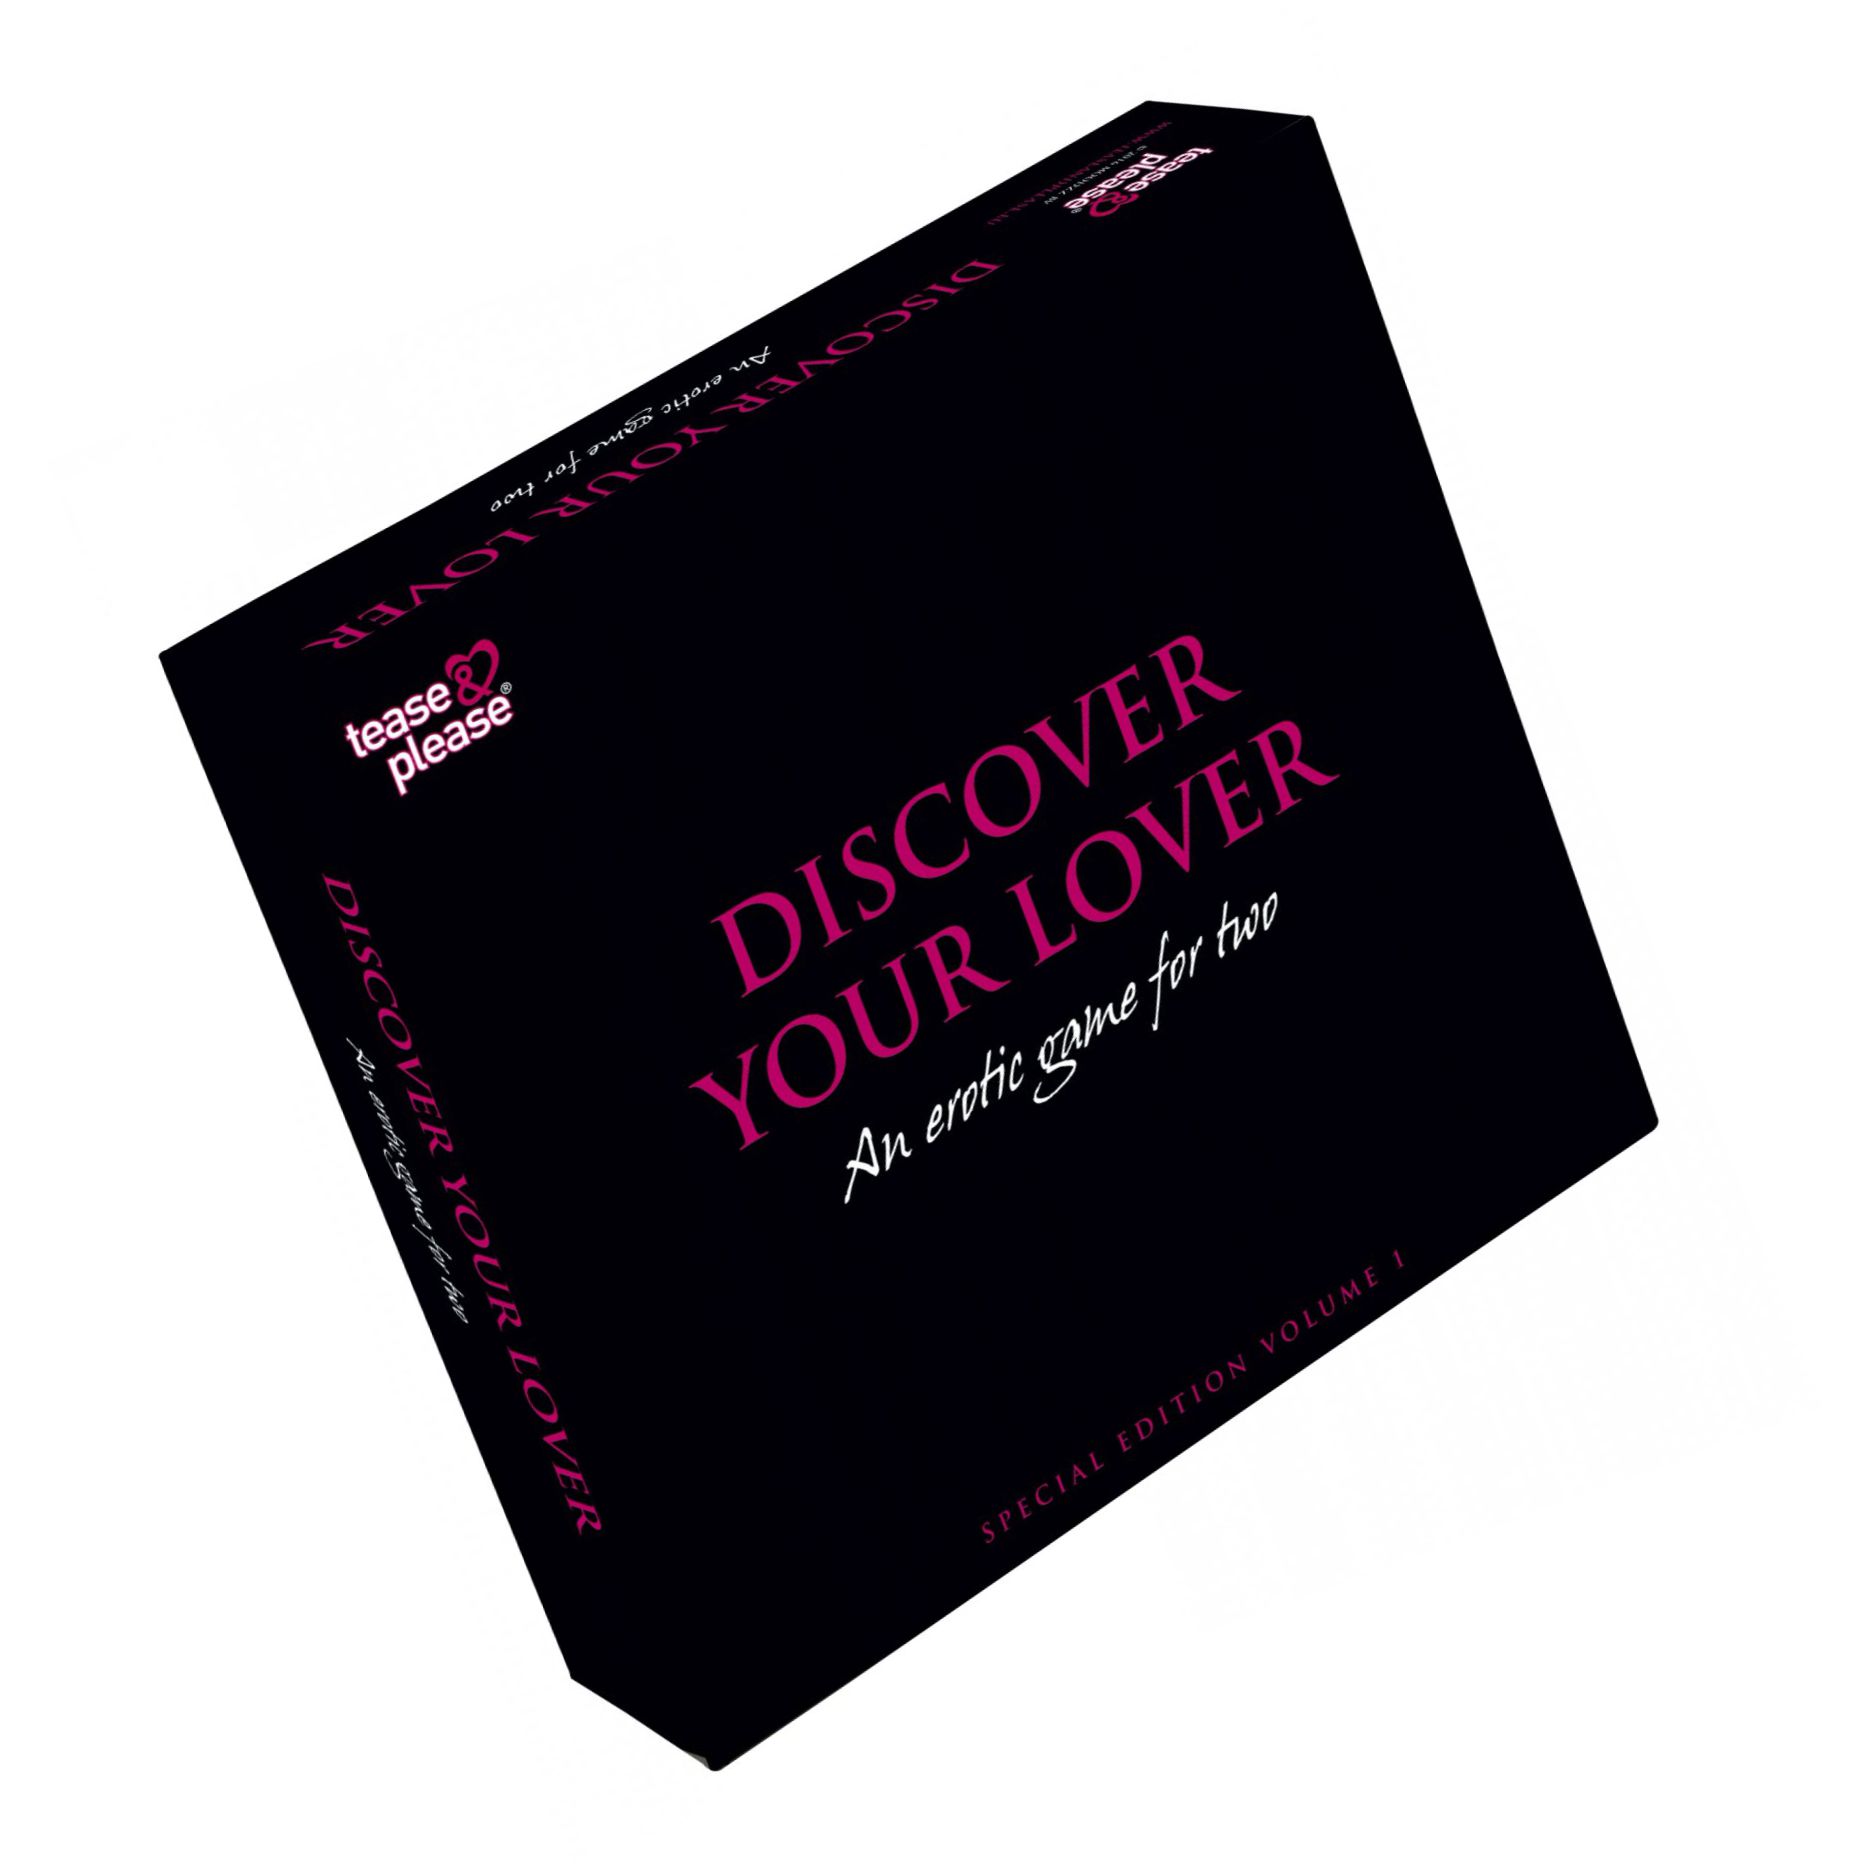 Discover Your Lover Special Edition (EN)